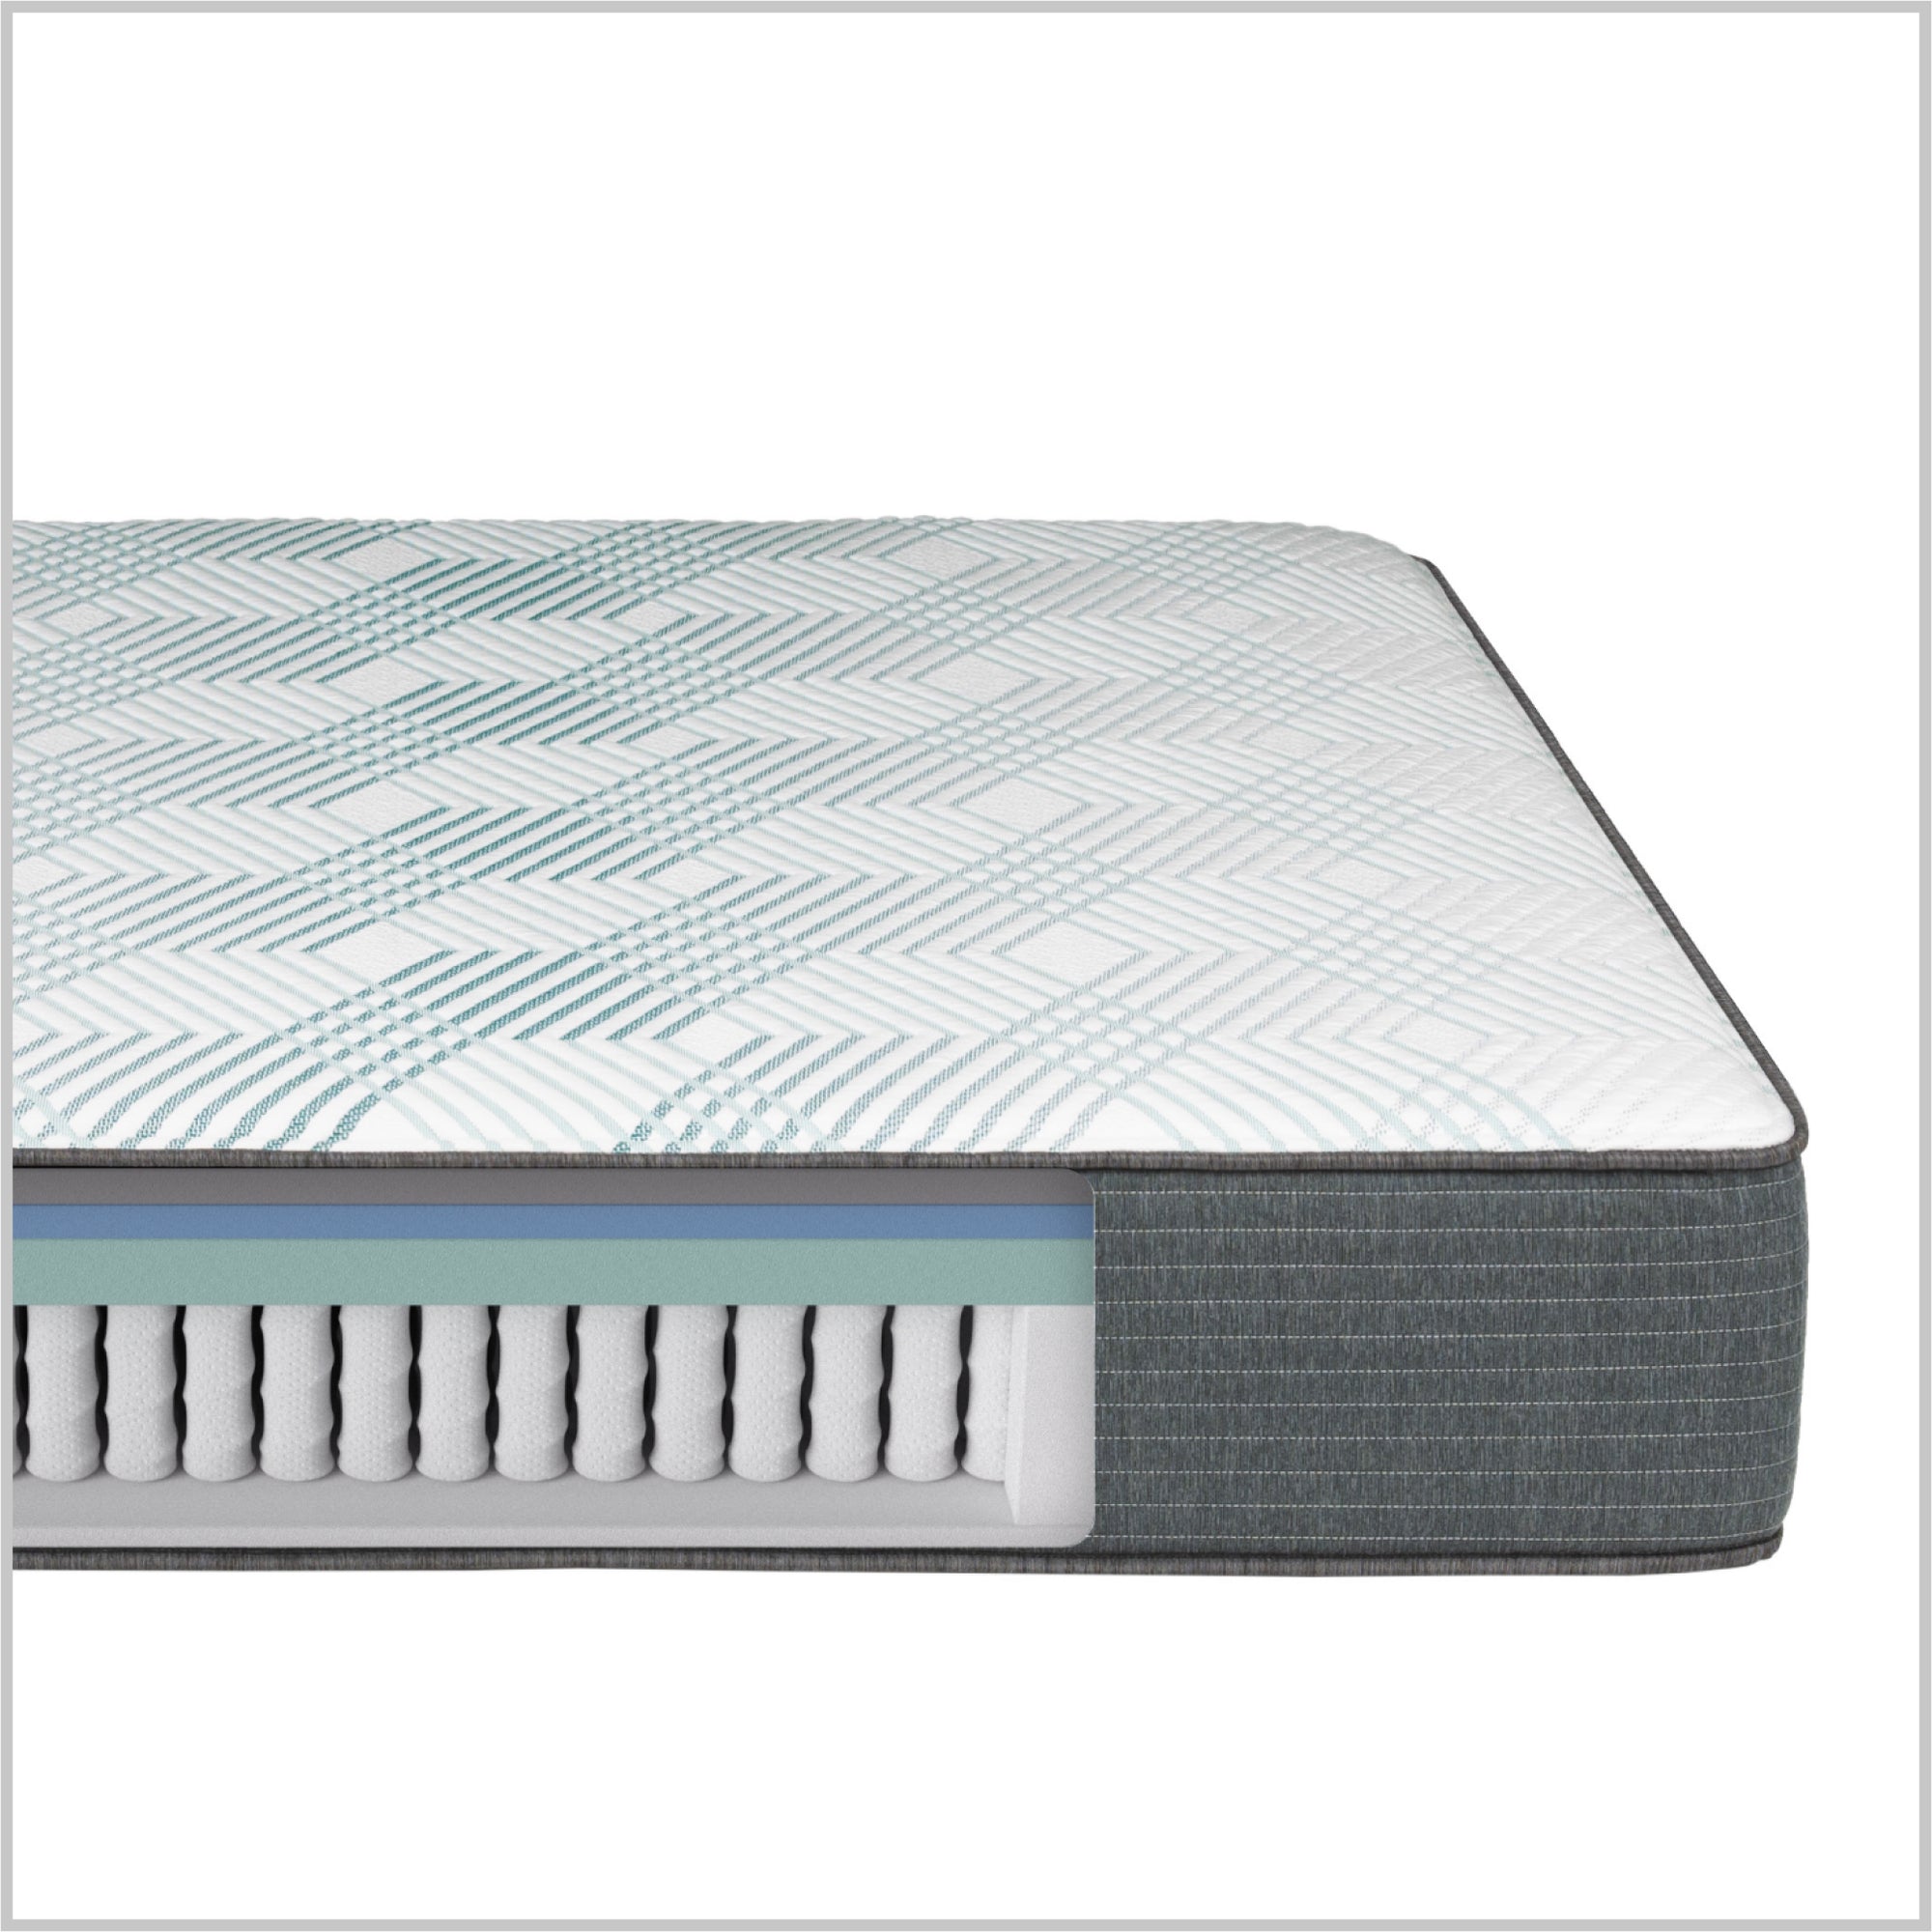 Diagram showing the material inside the Beautyrest PressureSmart mattress||feel: medium||series: hybrid